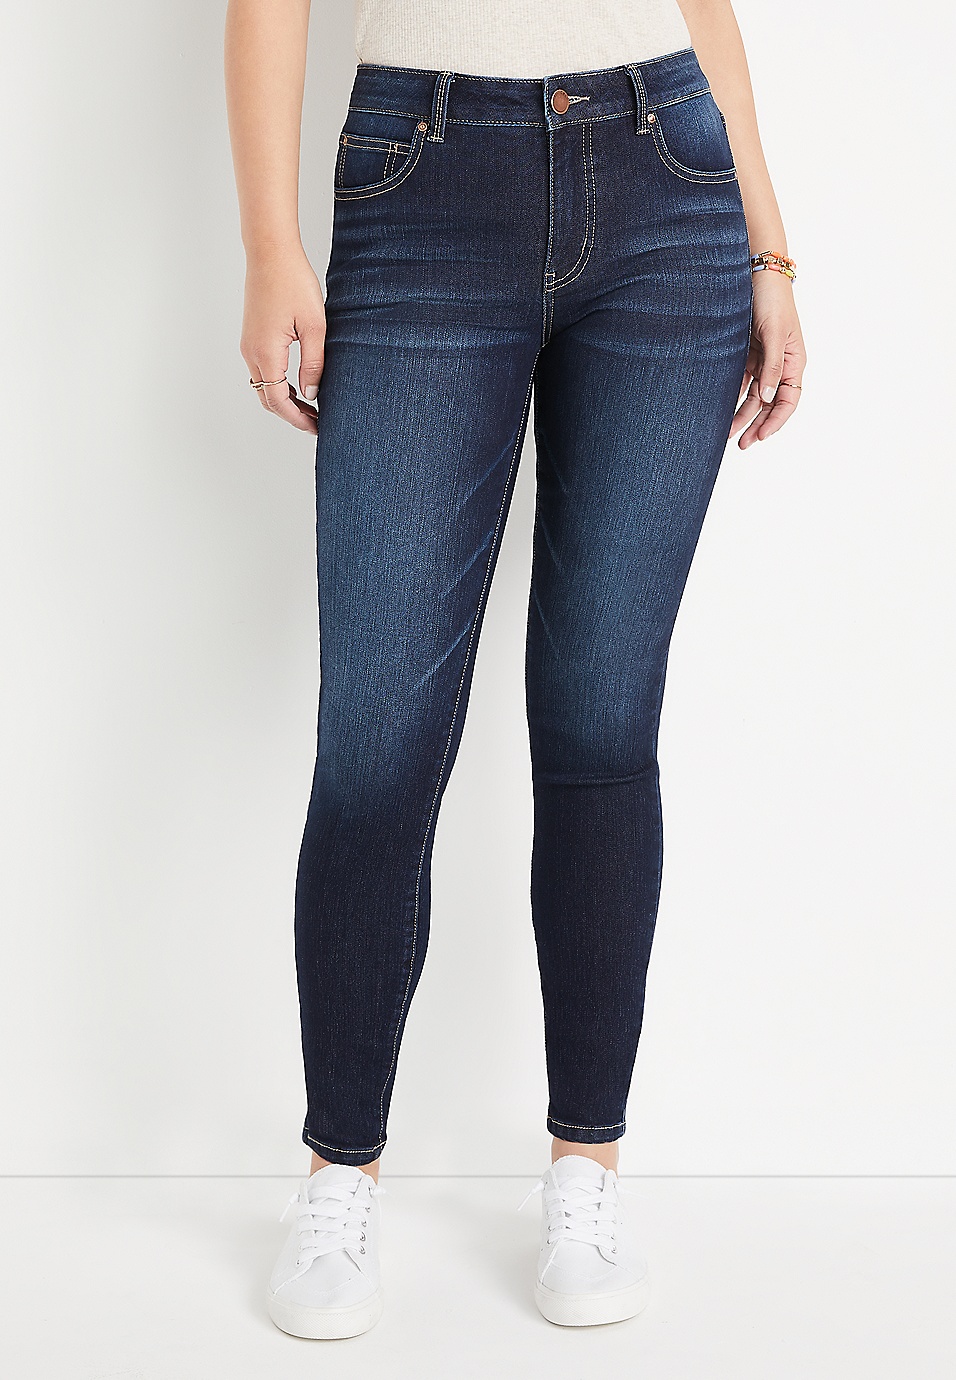 Phalanx Zeeman vertrekken m jeans by maurices™ Everflex™ Super Skinny High Rise Stretch Jean |  maurices